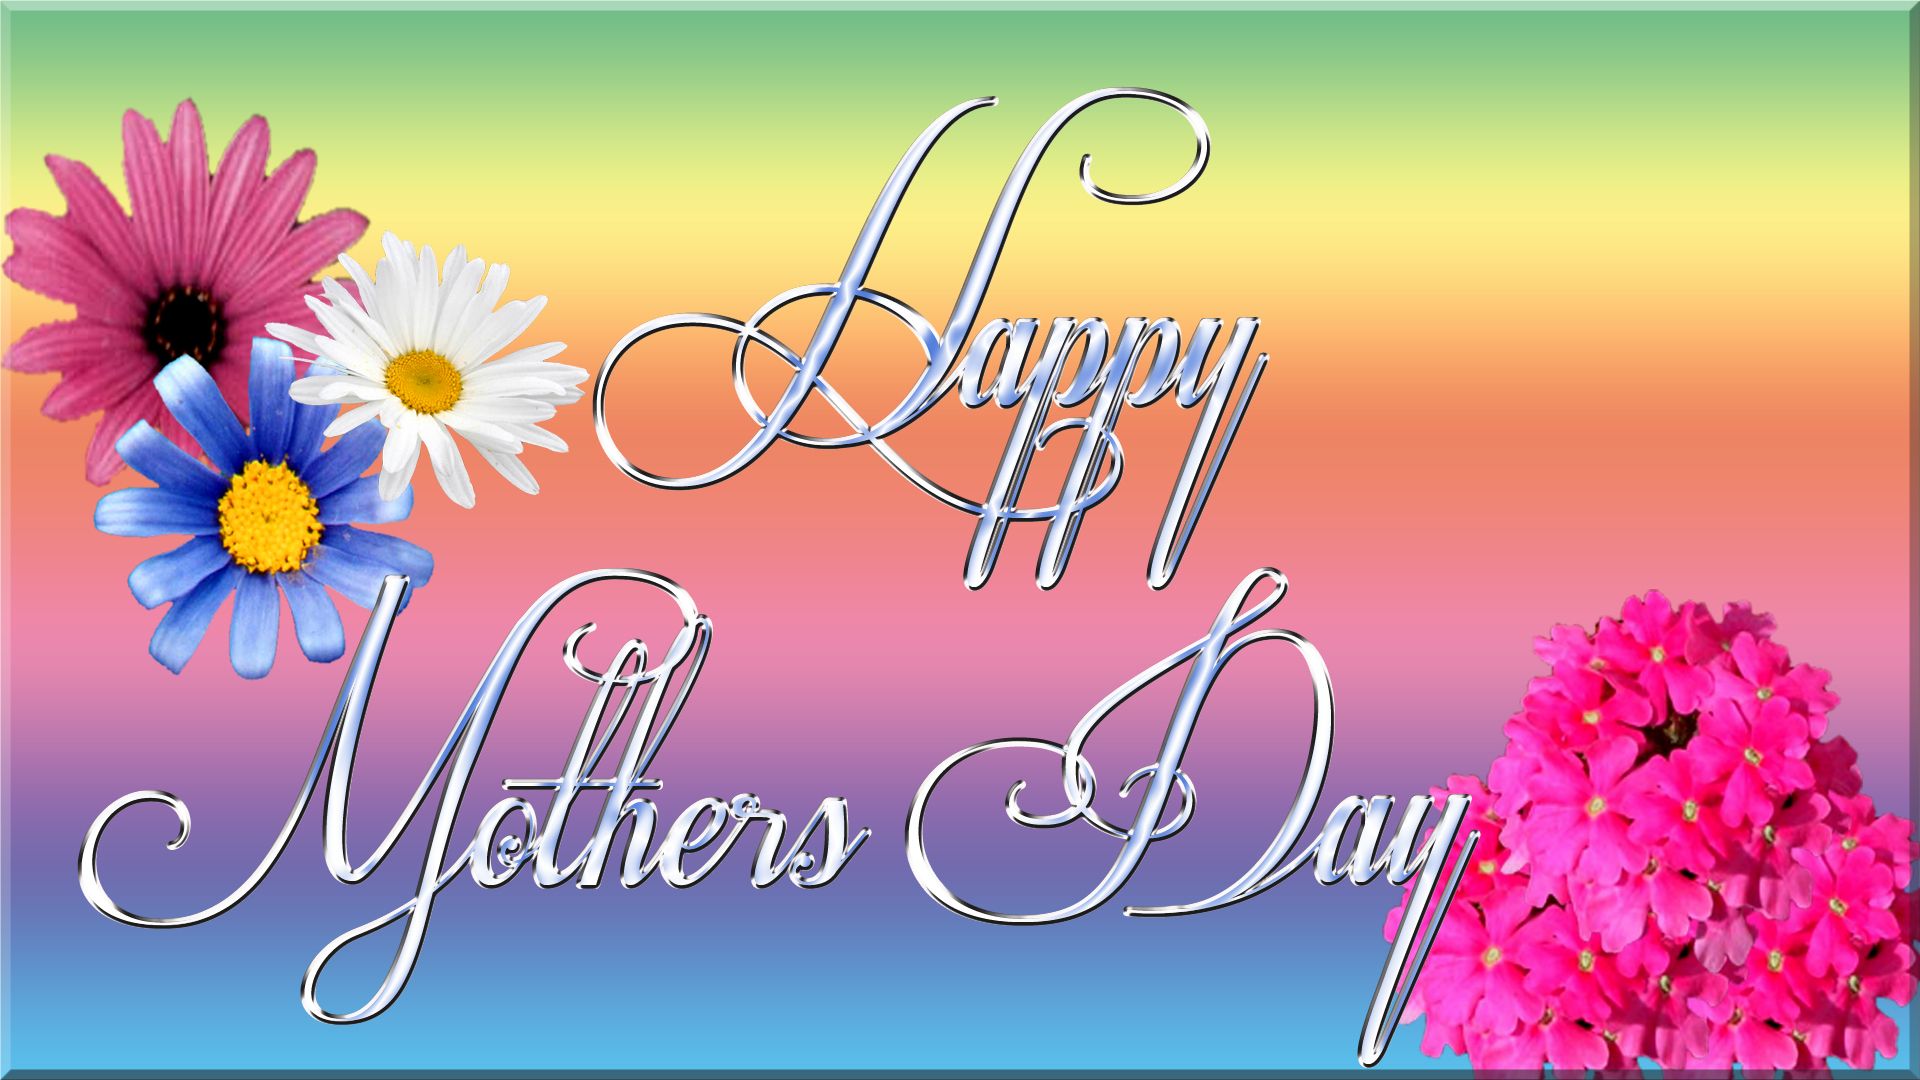 Free download Happy Mother Day Image .wallpaperafari.com